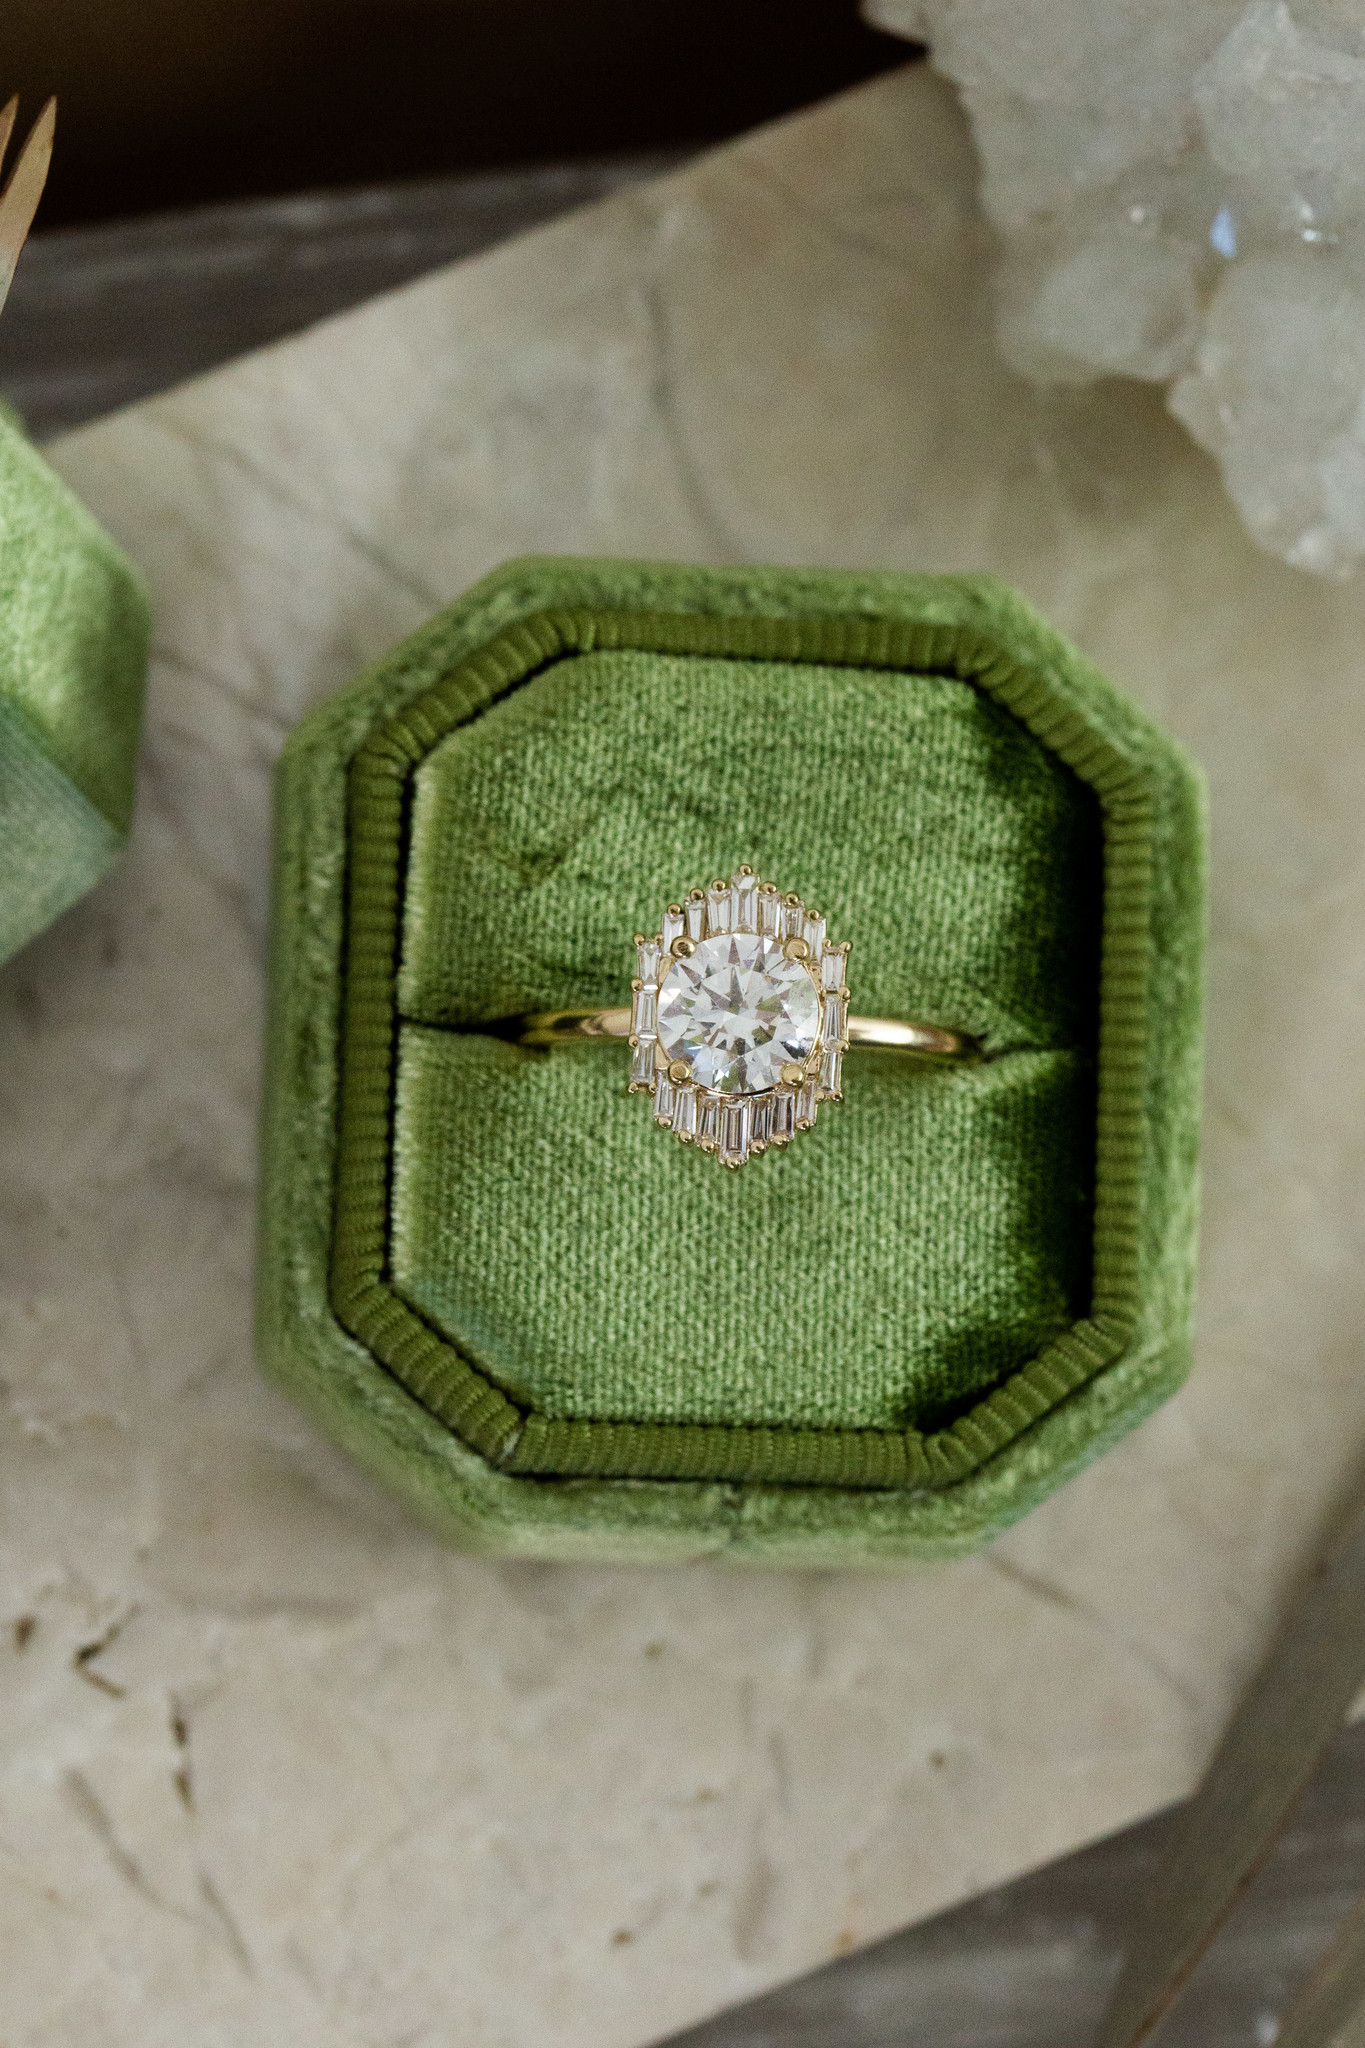 14kt Yellow Gold Round Cut Star Halo Diamond Engagement Ring